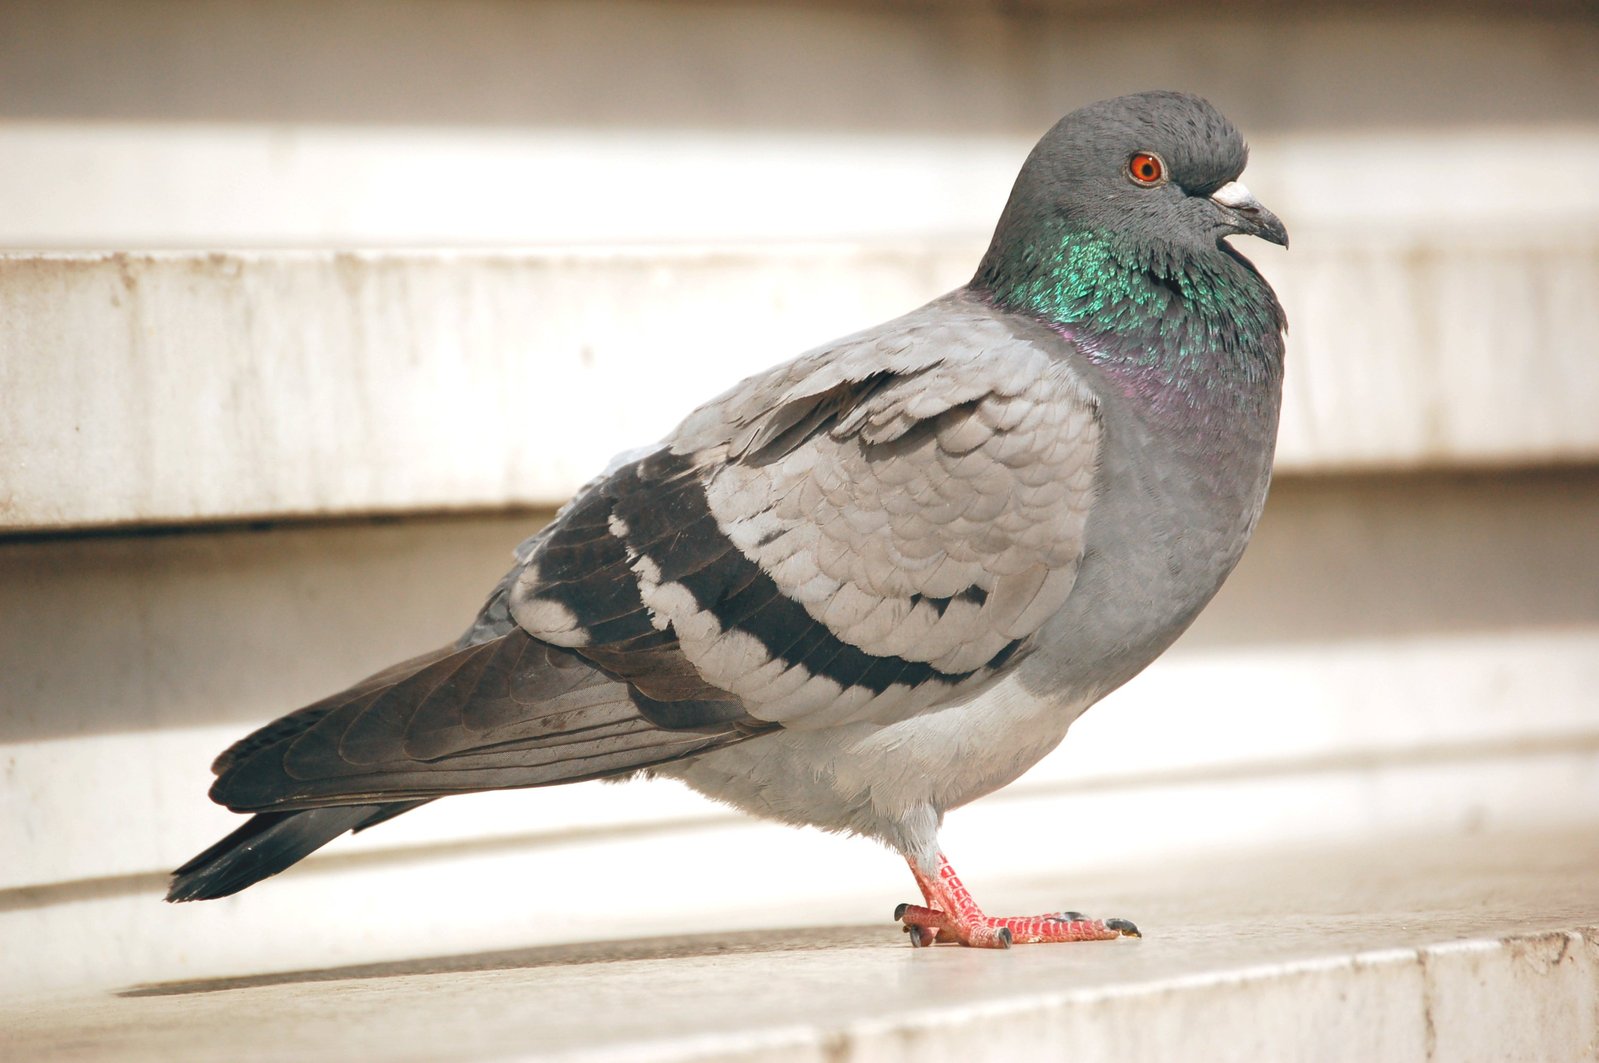 a close up of a bird on a concrete ledge